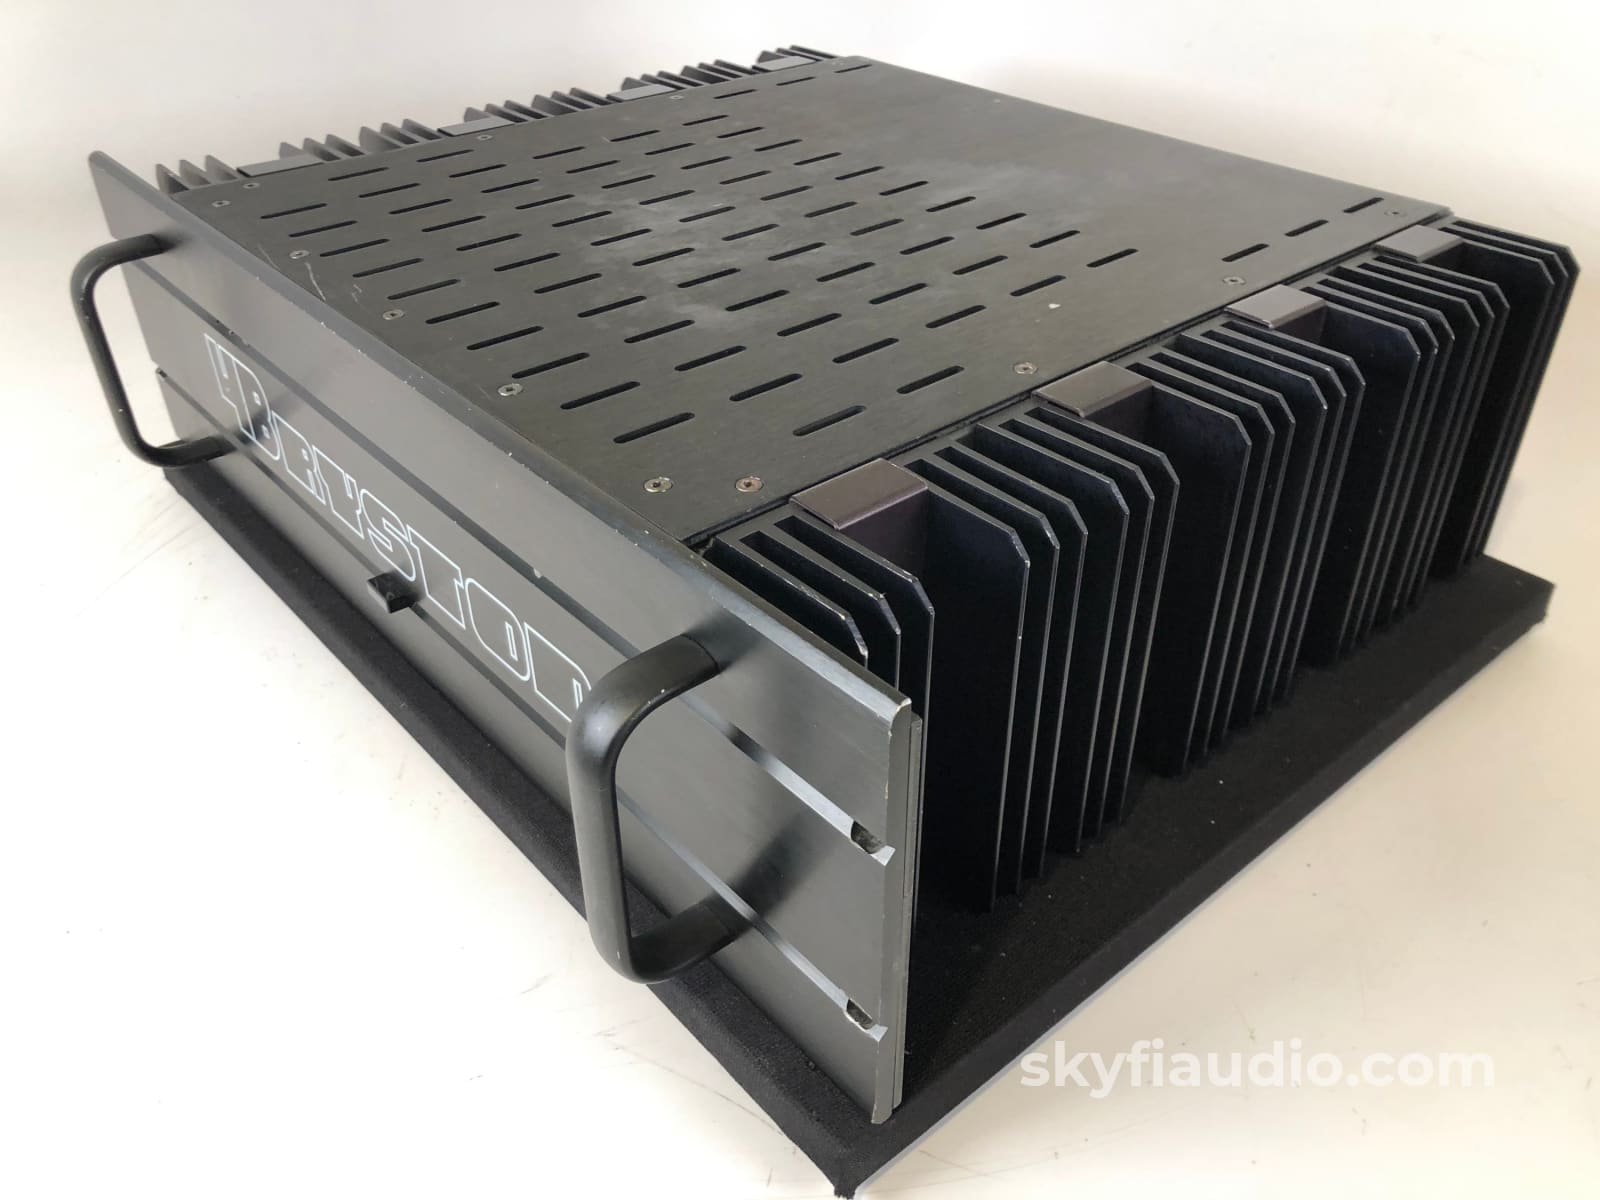 Bryston 4Be Amplifier - Rare Professional Studio Model